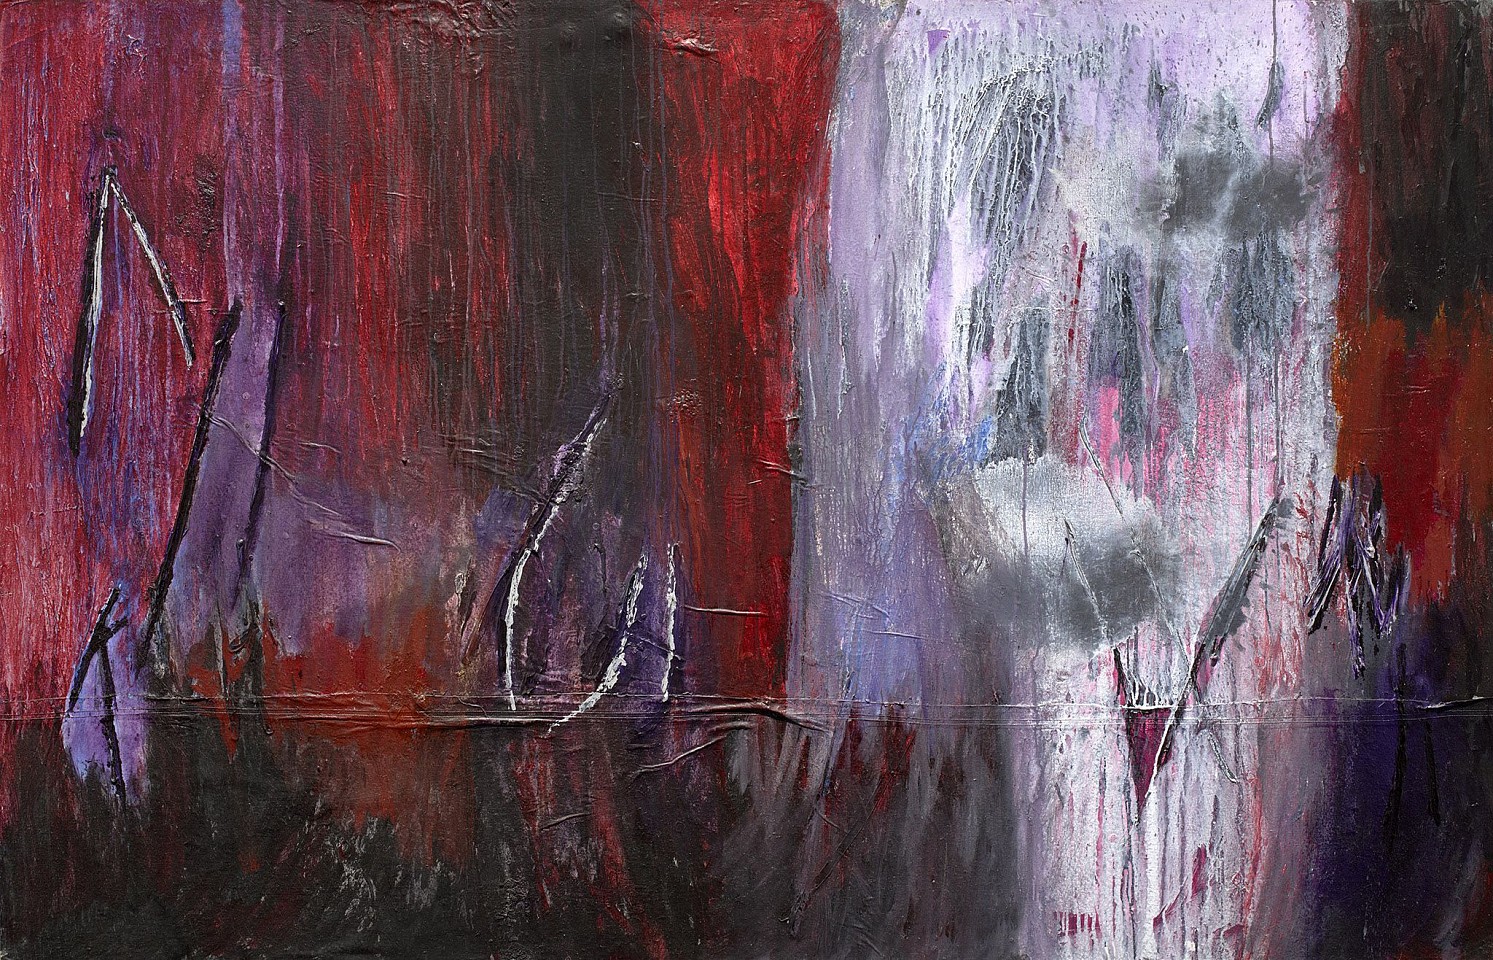 Ann Purcell, Dark Symphony, 2004
Acrylic on canvas, 53 3/4 x 83 1/4 in. (136.5 x 211.5 cm)
PUR-00134